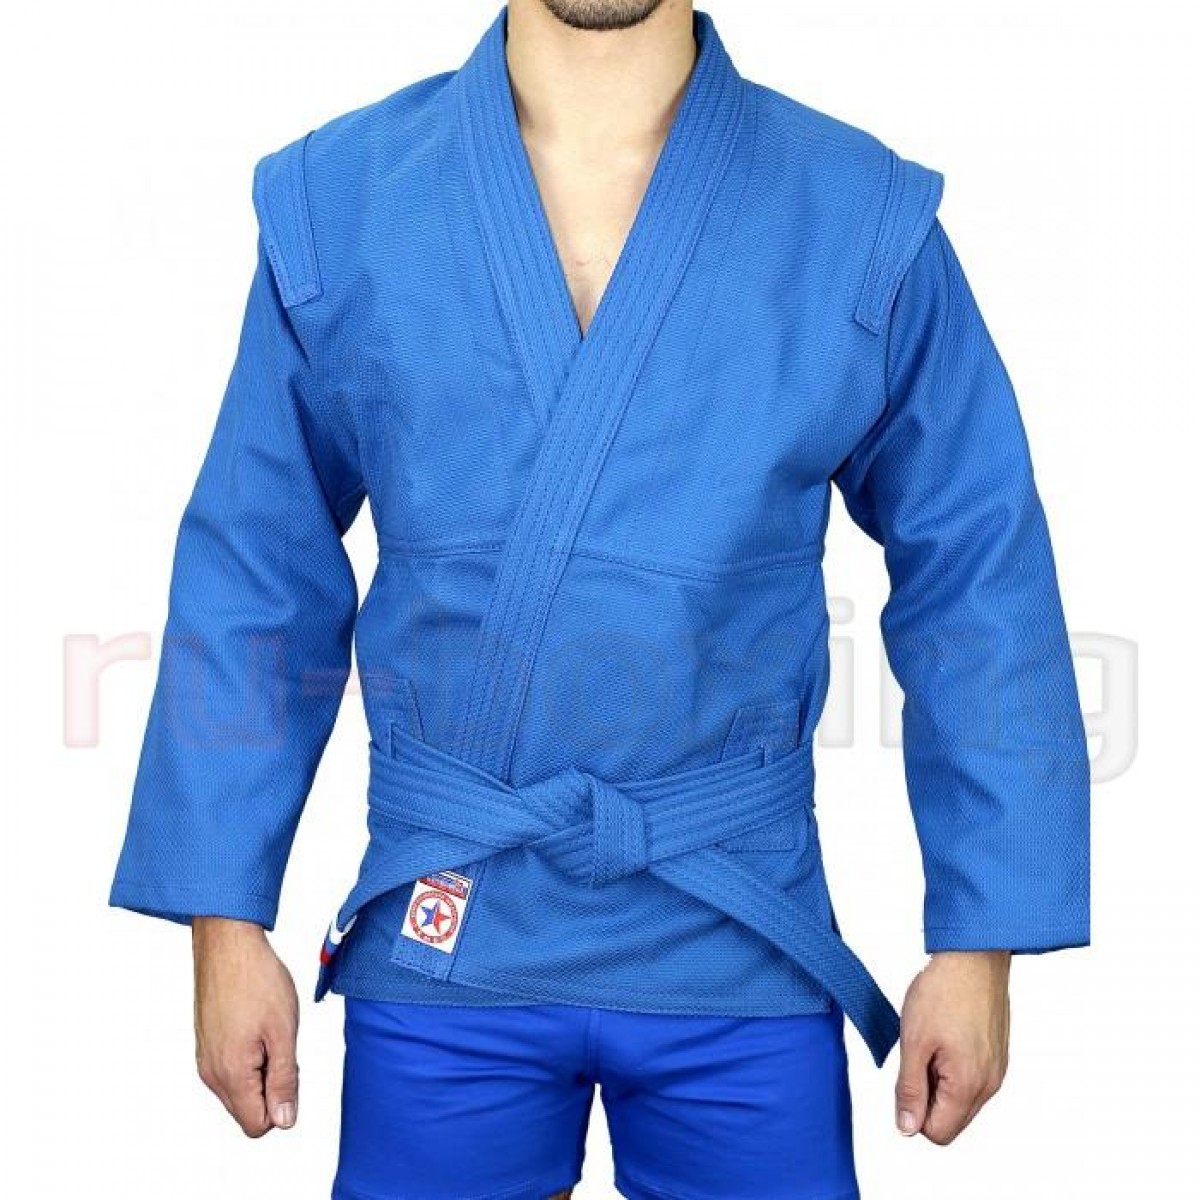 Куртка для самбо Атака размер 58 синяя